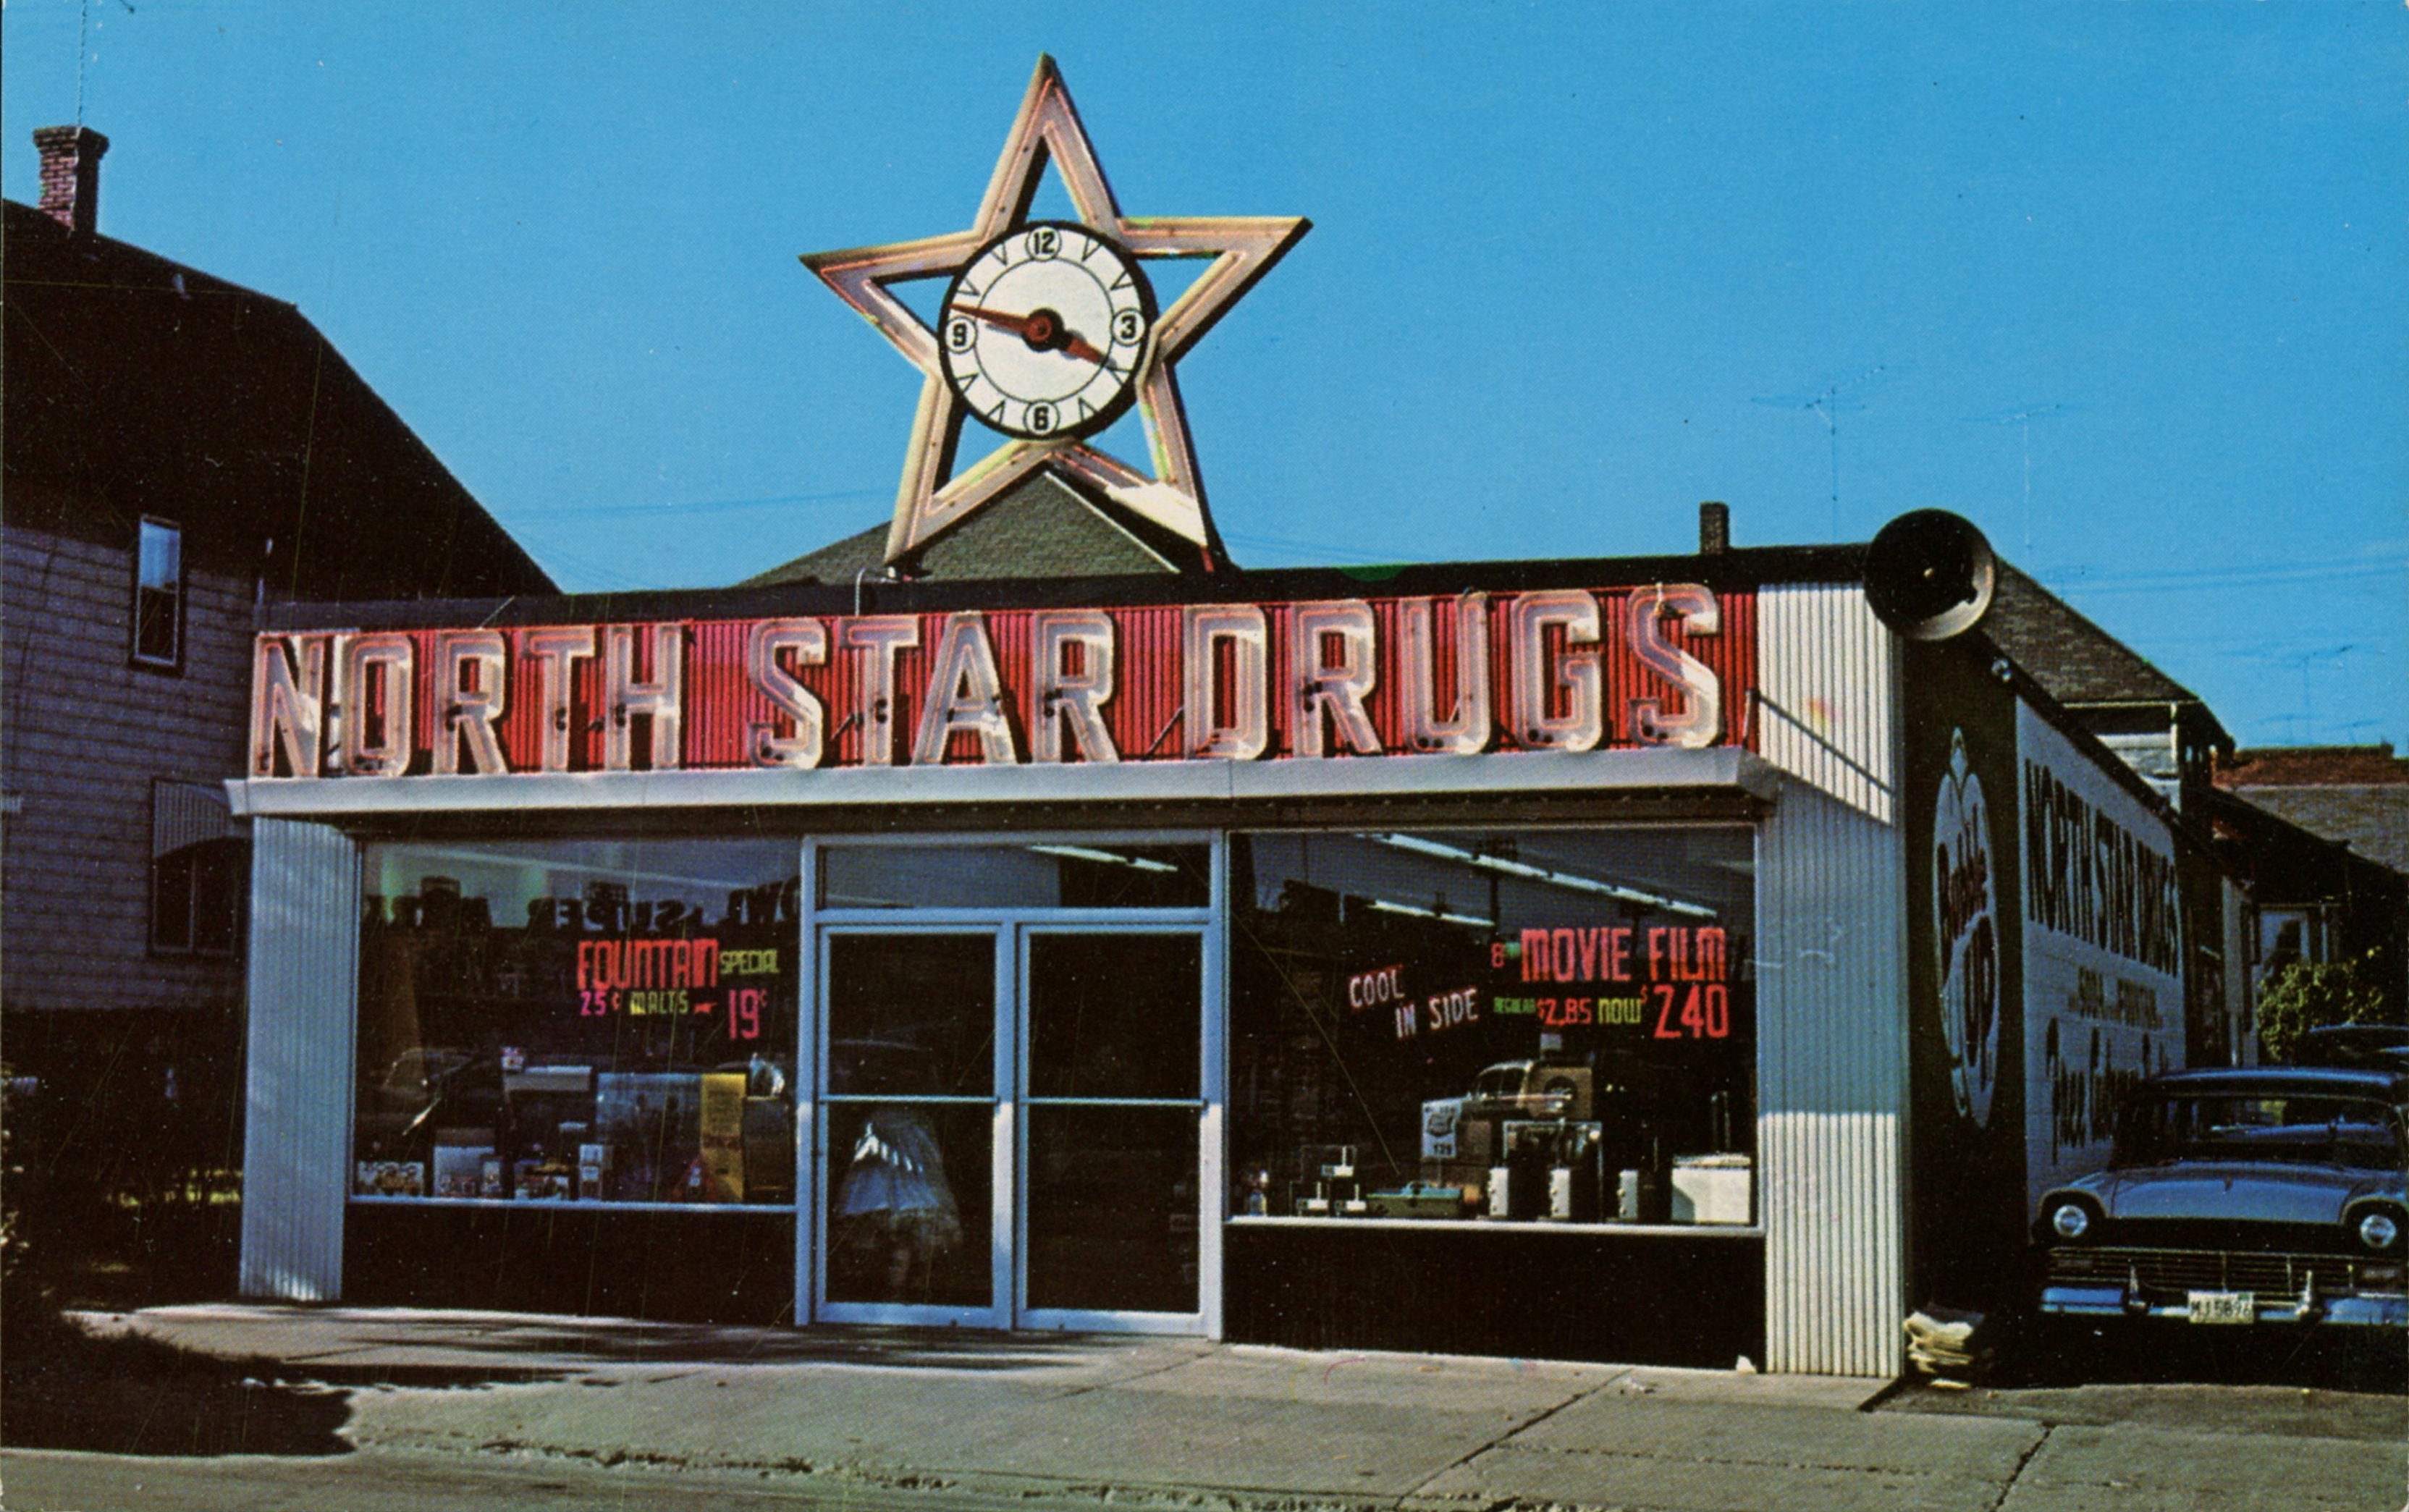 North Star Drugs - Virginia, Minnesota U.S.A. - 1950s